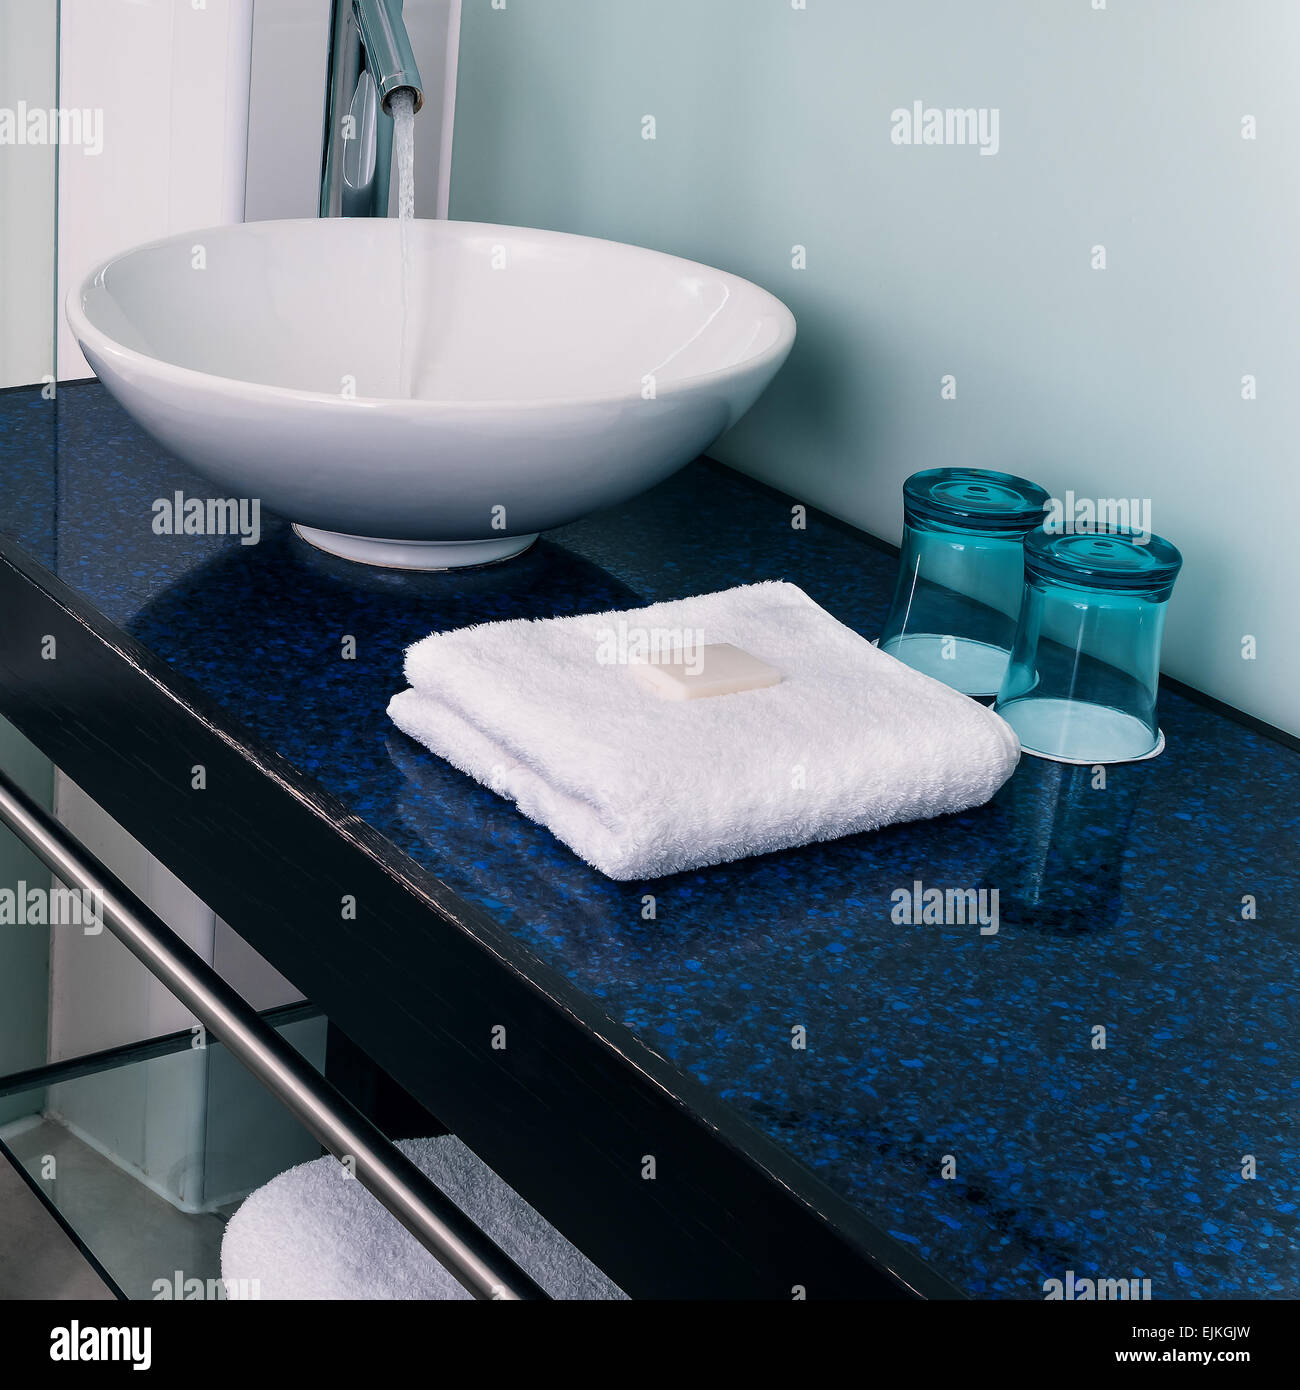 Lavabo del baño toallas contador de agua azul de vidrio Foto de stock